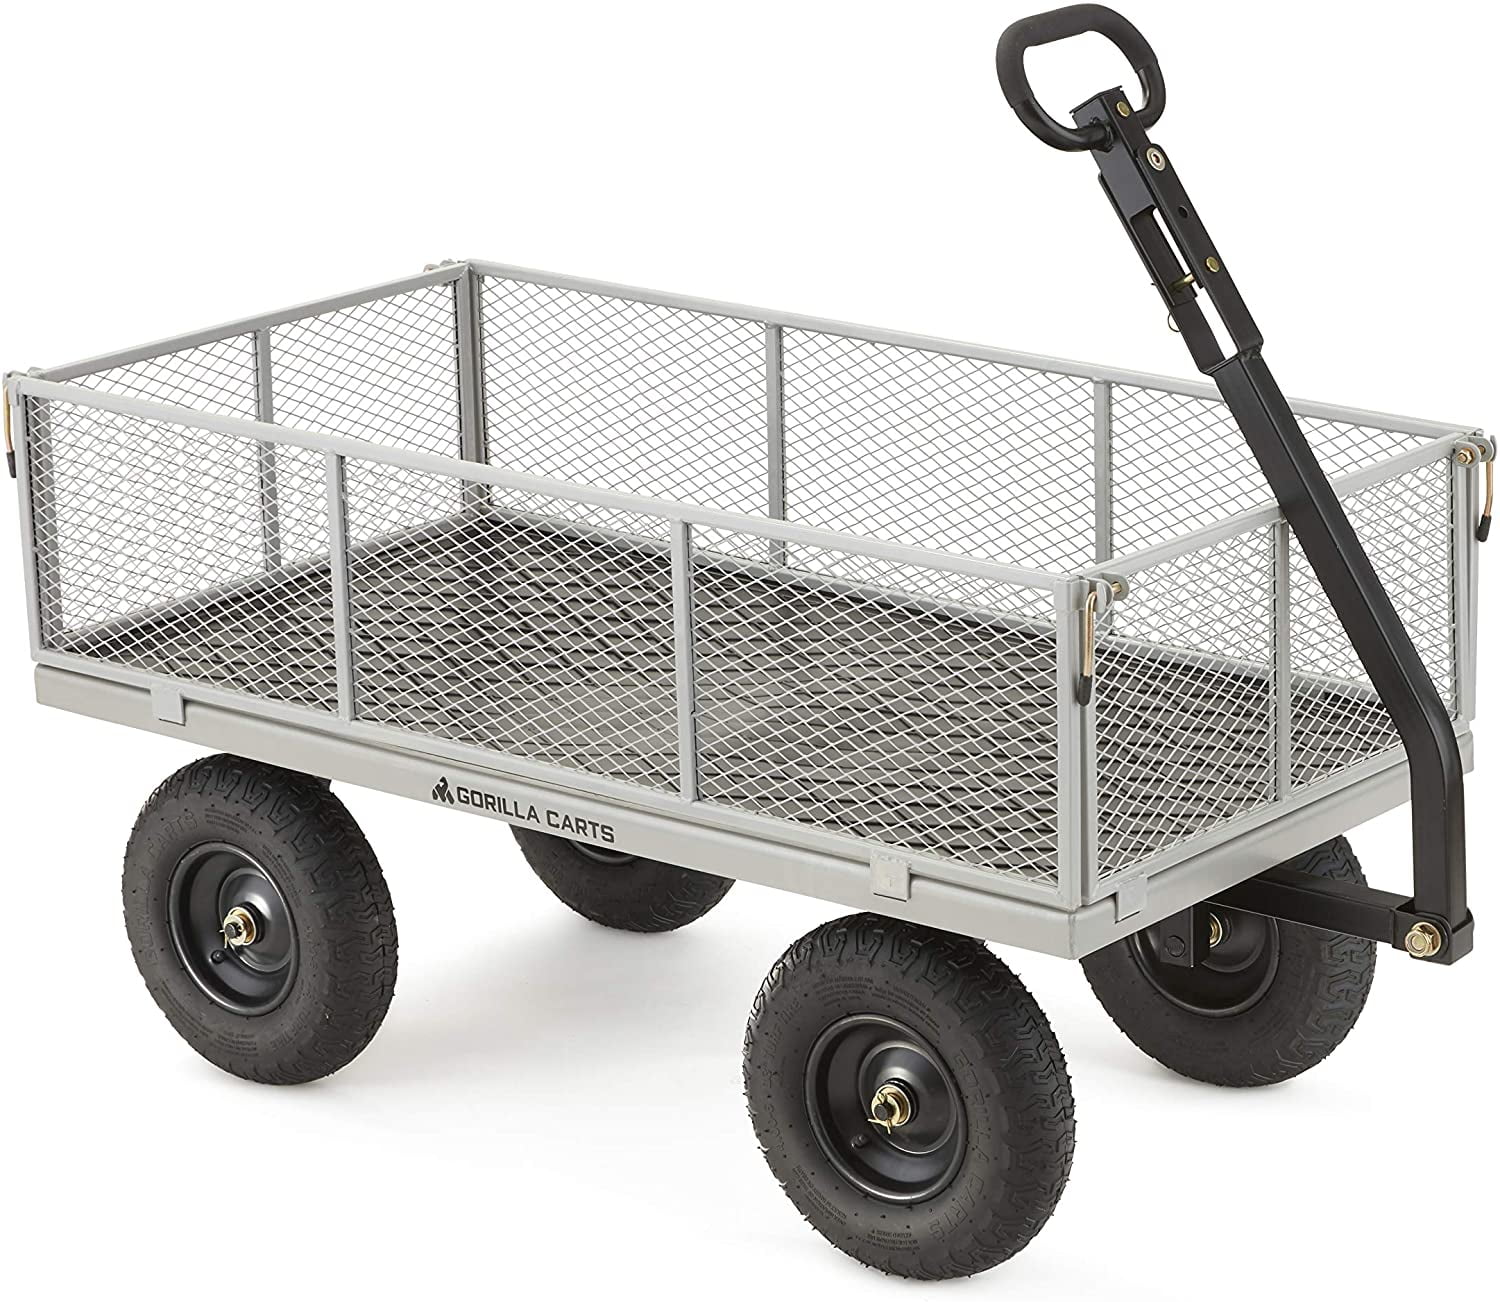 Gorilla Carts Utility Cart 1,000 lb Heavy-Duty Steel Removable Side Panels Yard 